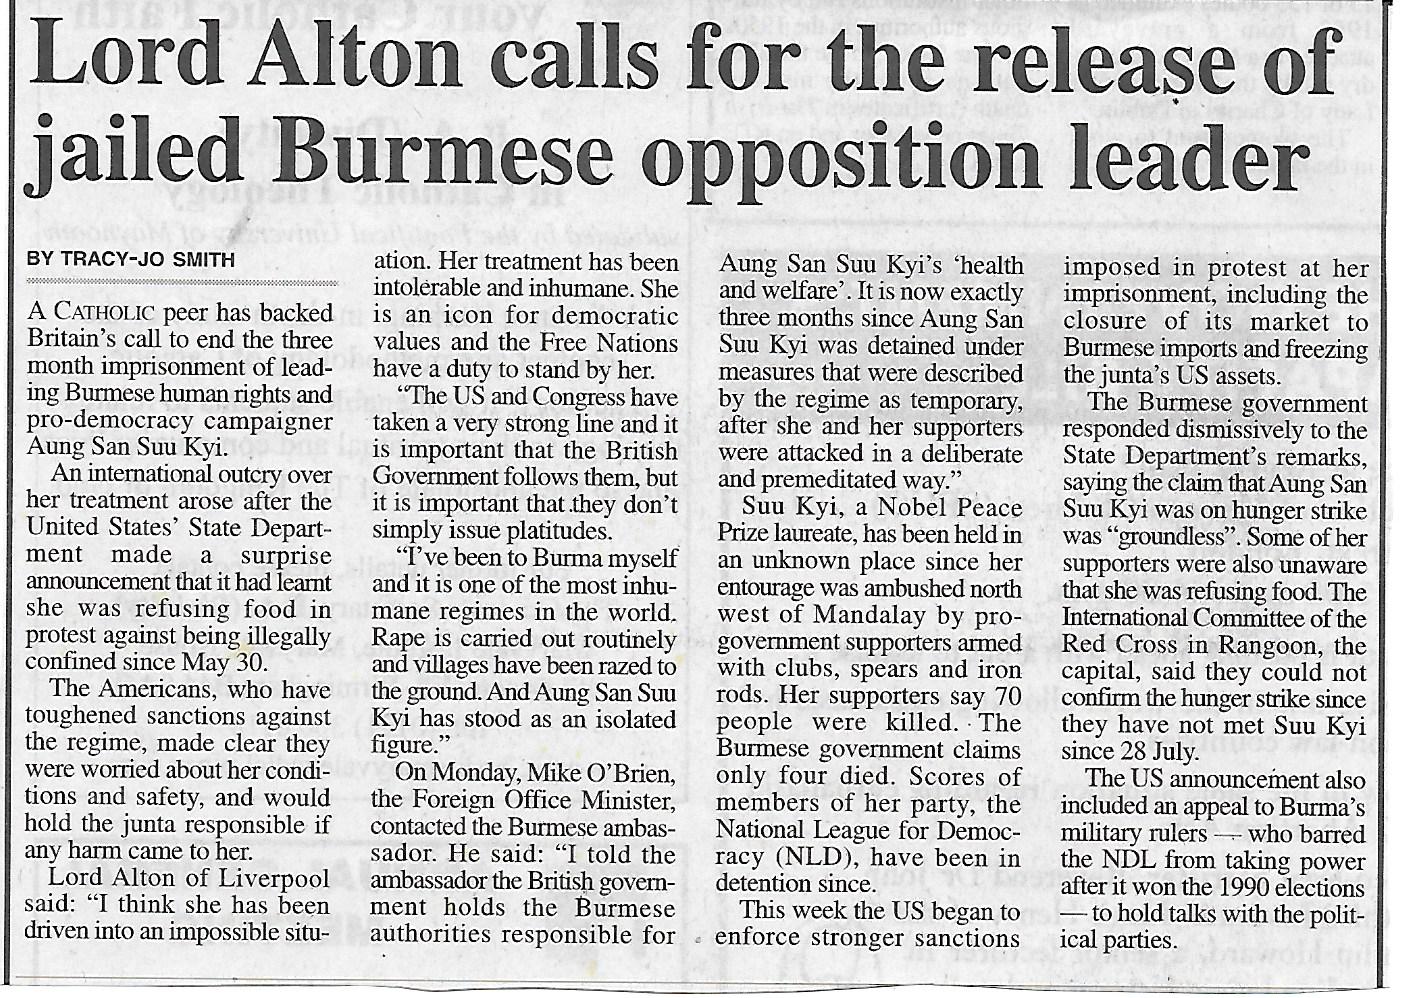 2003 - call for release of Burma's Aung San Suu Kyi